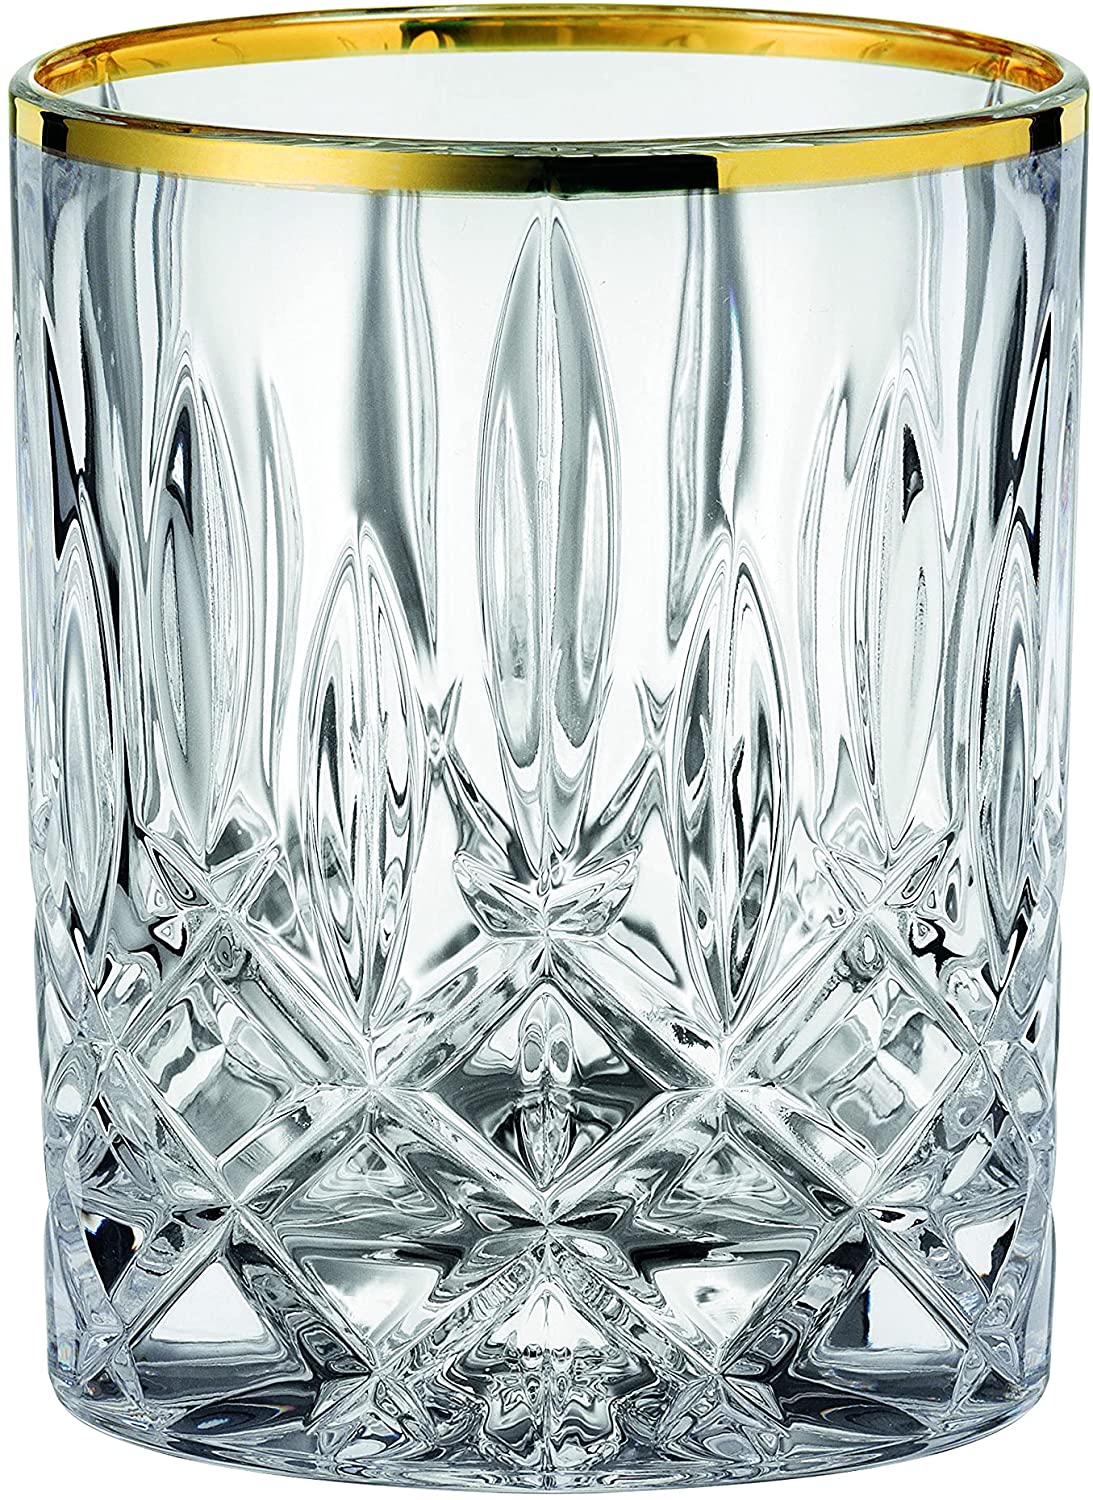 Spiegelau & Nachtmann 104025 Whisky Tumbler Set Crystal Glass